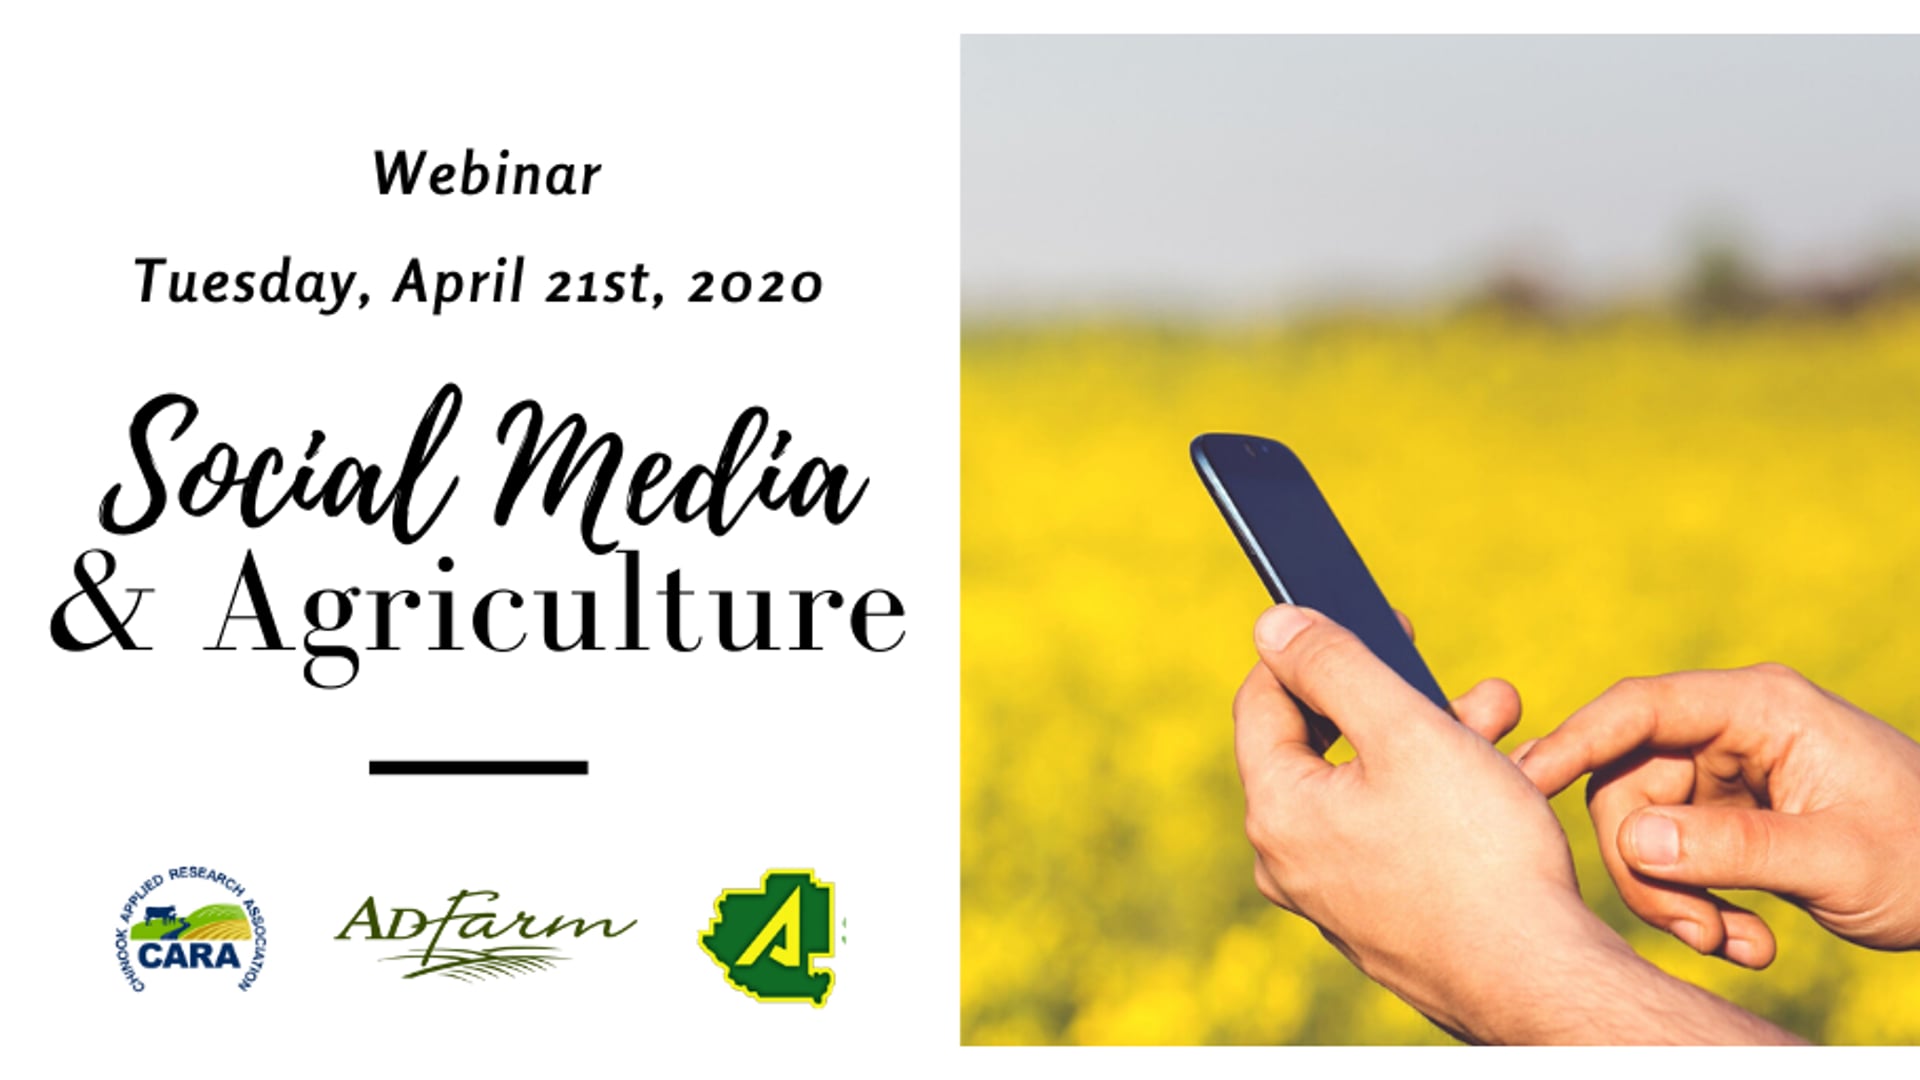 Social Media & Agriculture